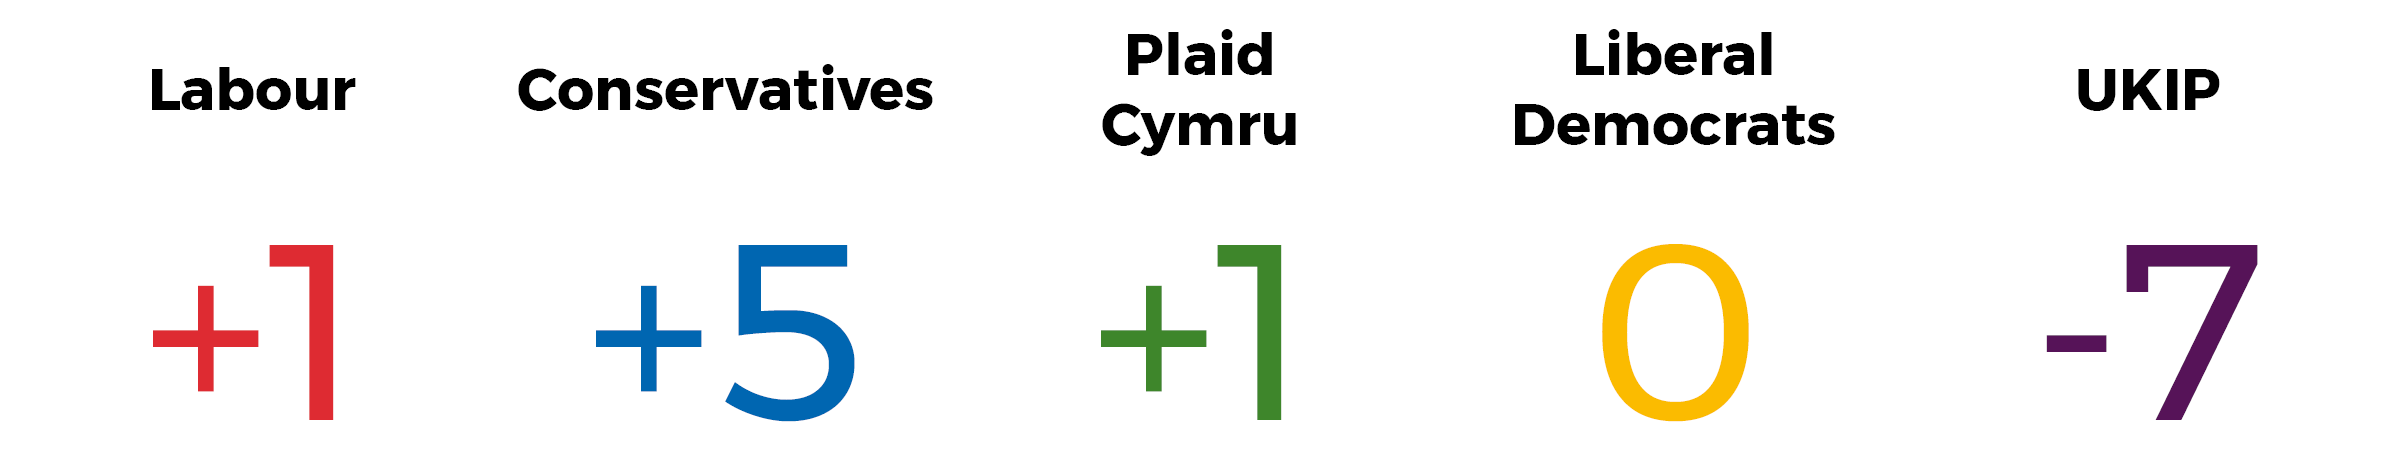 A graphic showing change in seats. Labour +1, Conservatives +5, Plaid Cymru +1, Liberal Democrats no change, UKIP -7